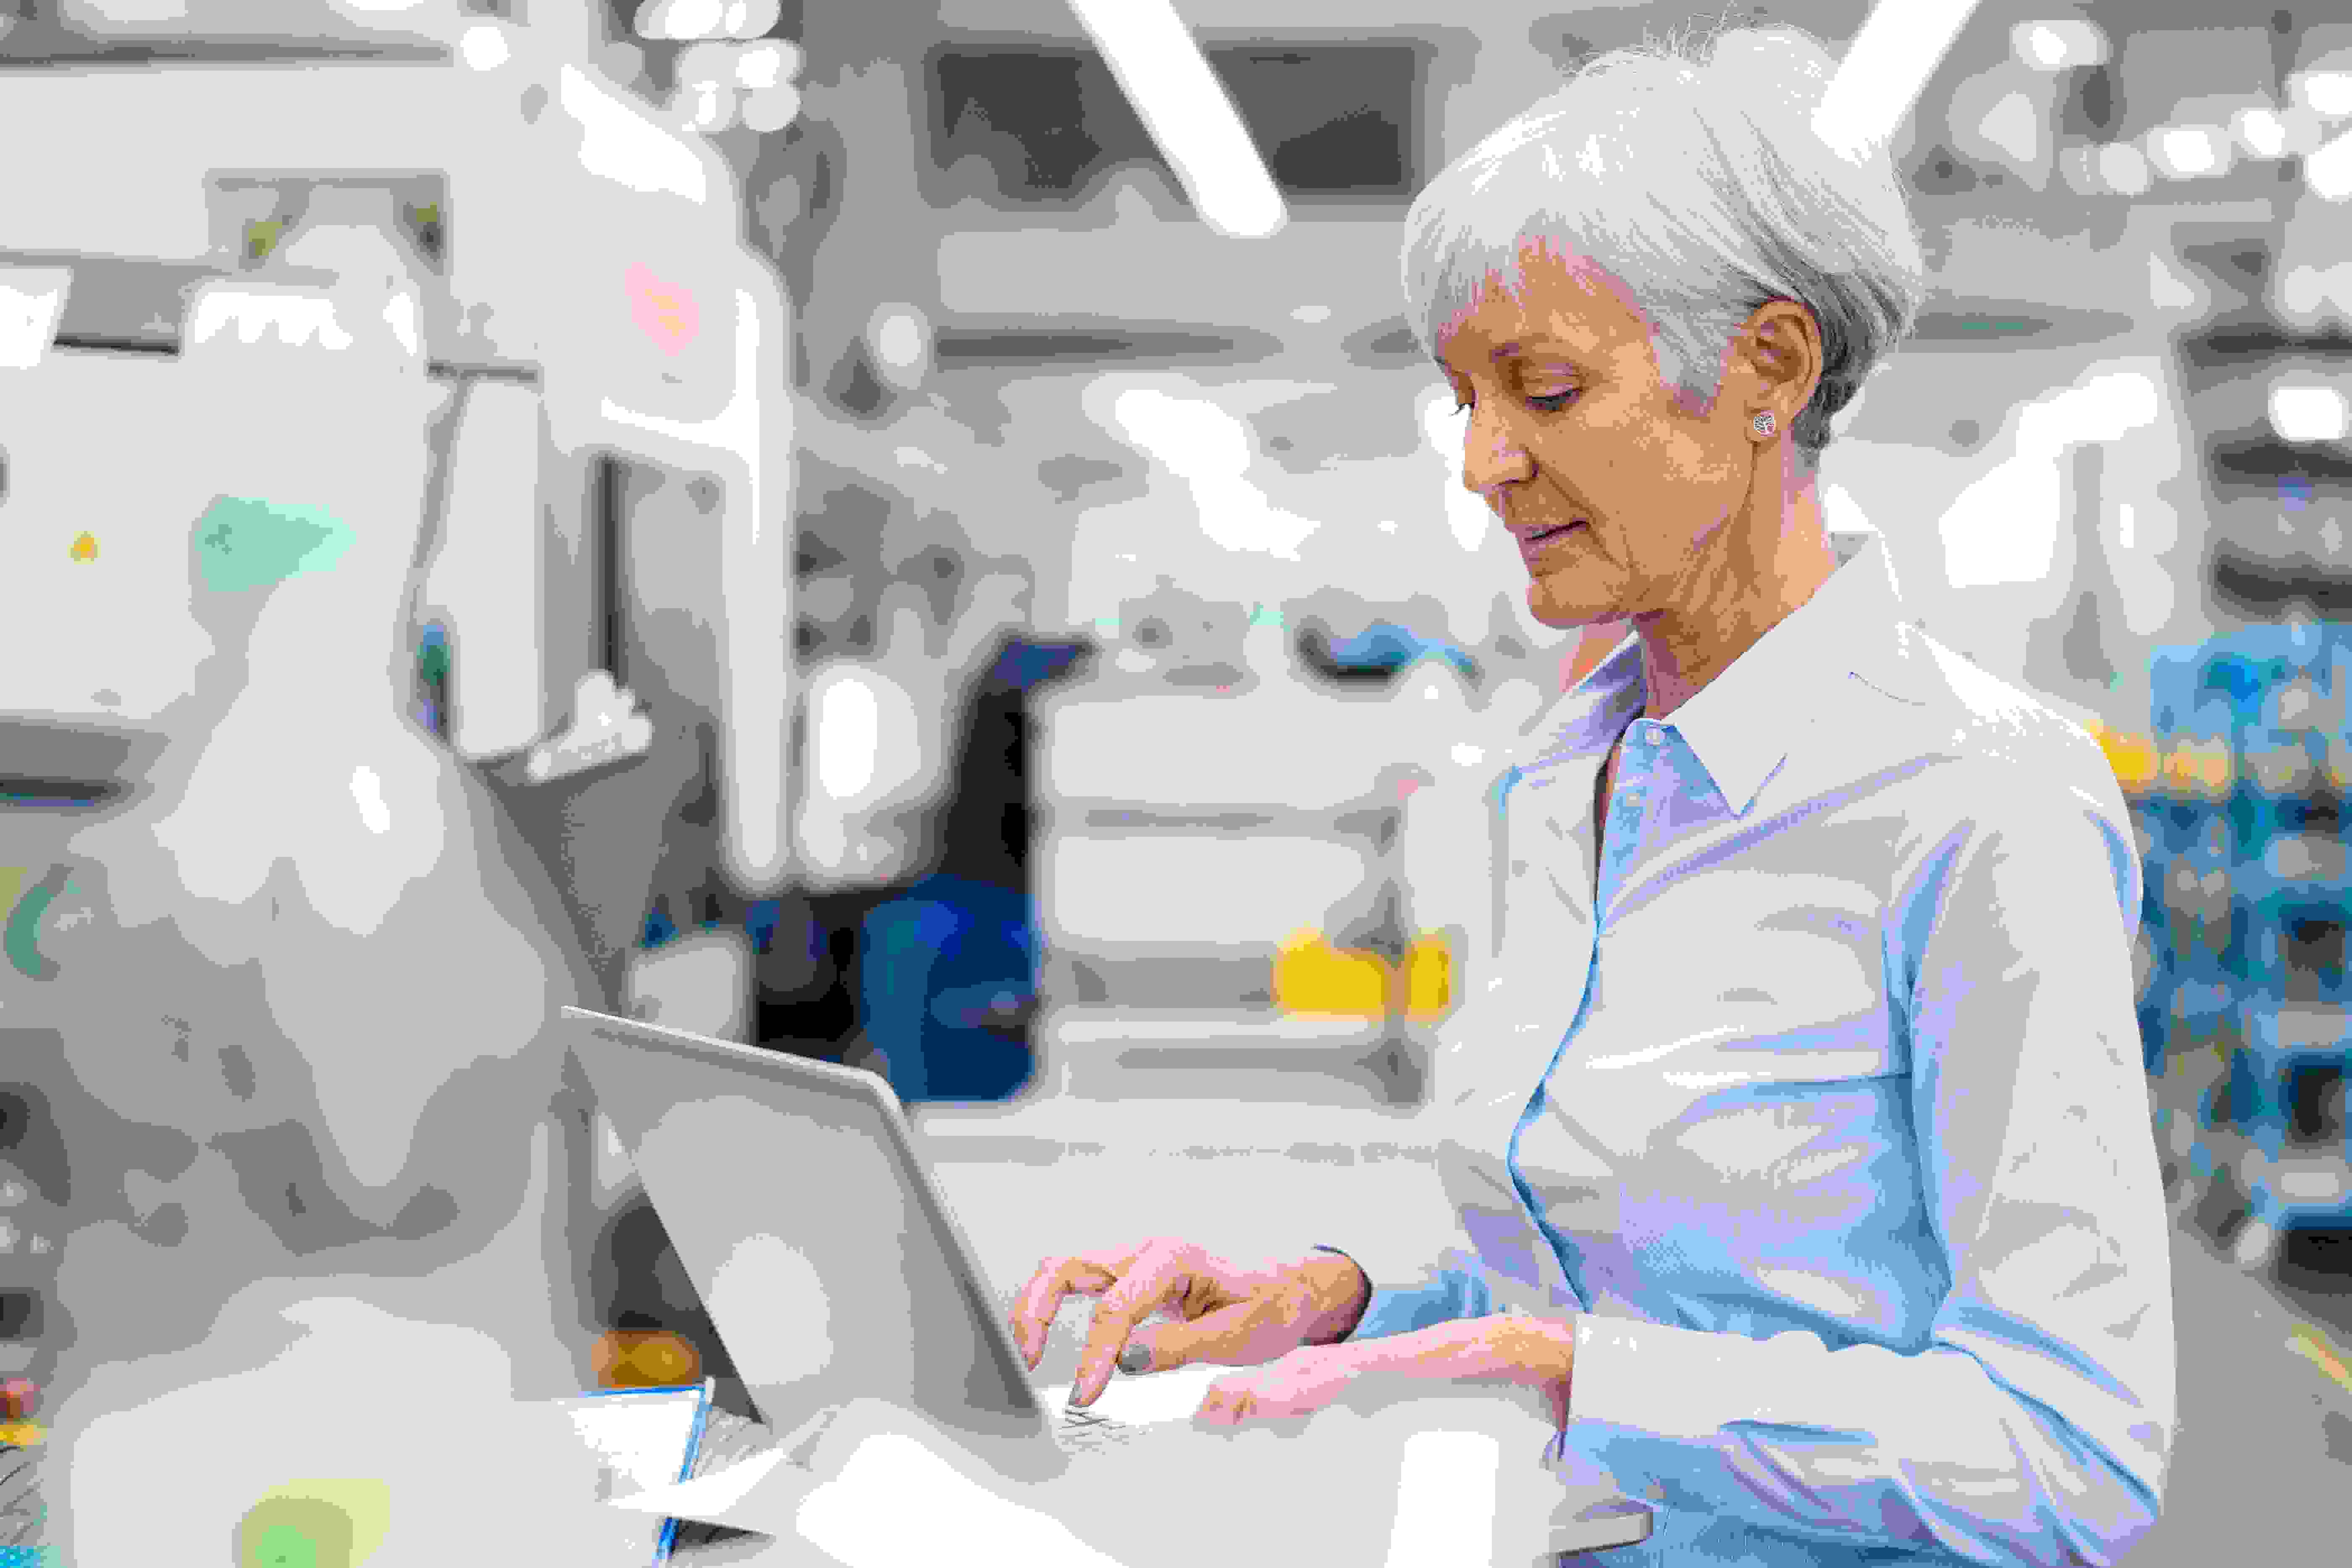 Senior Businesswoman Using Laptop In A Factory 2022 03 08 00 58 15 Utc